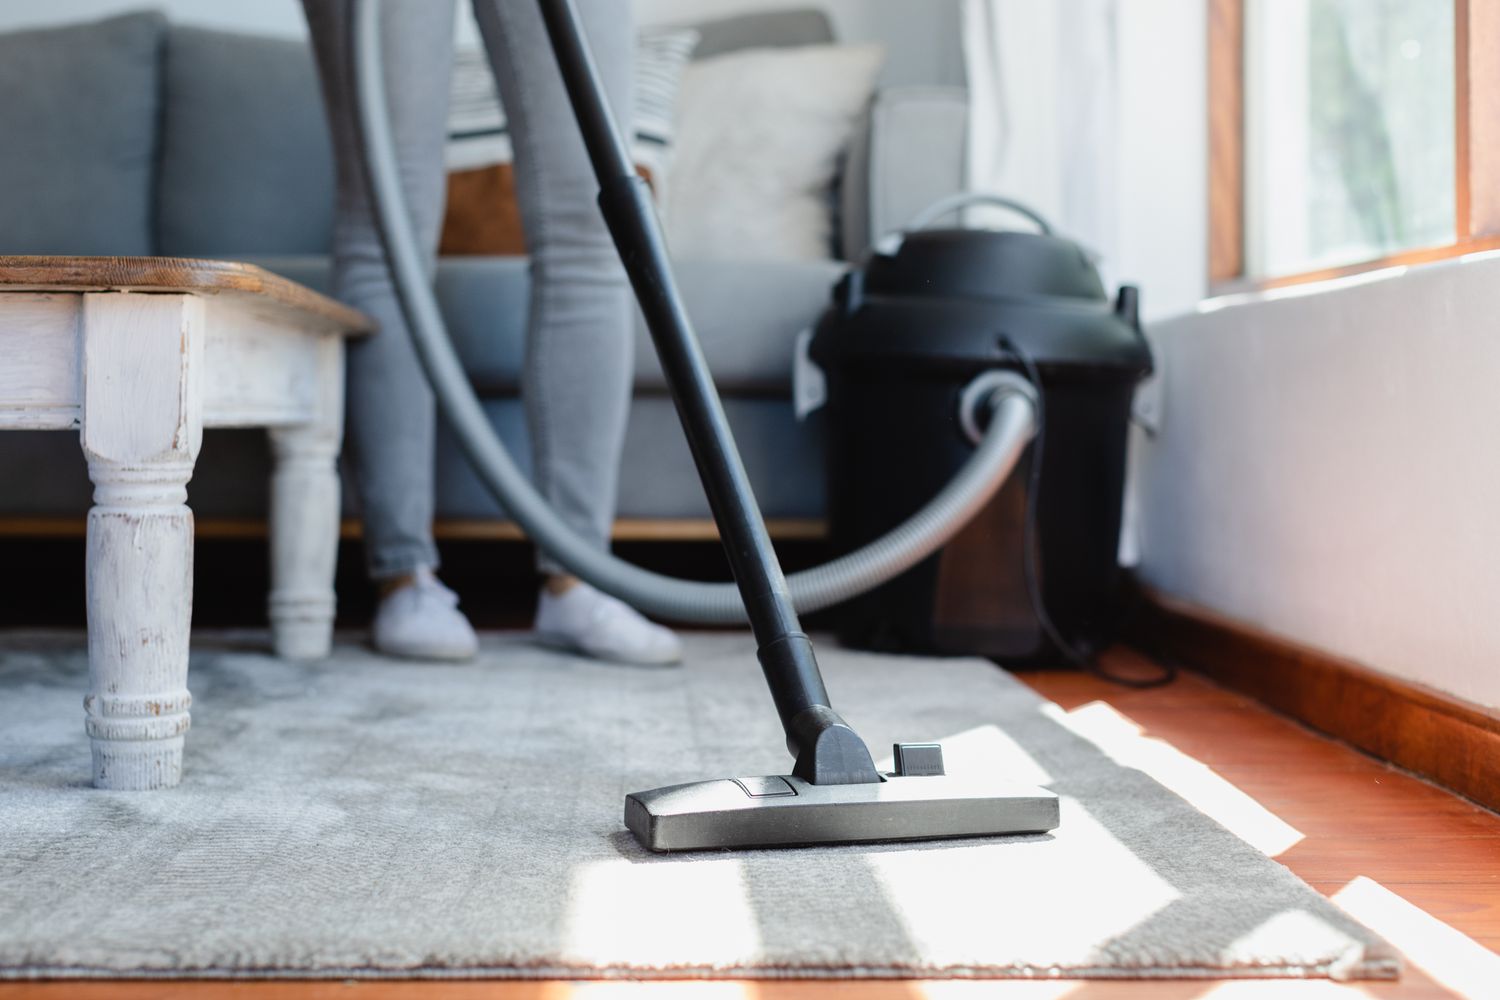 Upright vacuum cleaner vacuuming over carpet 